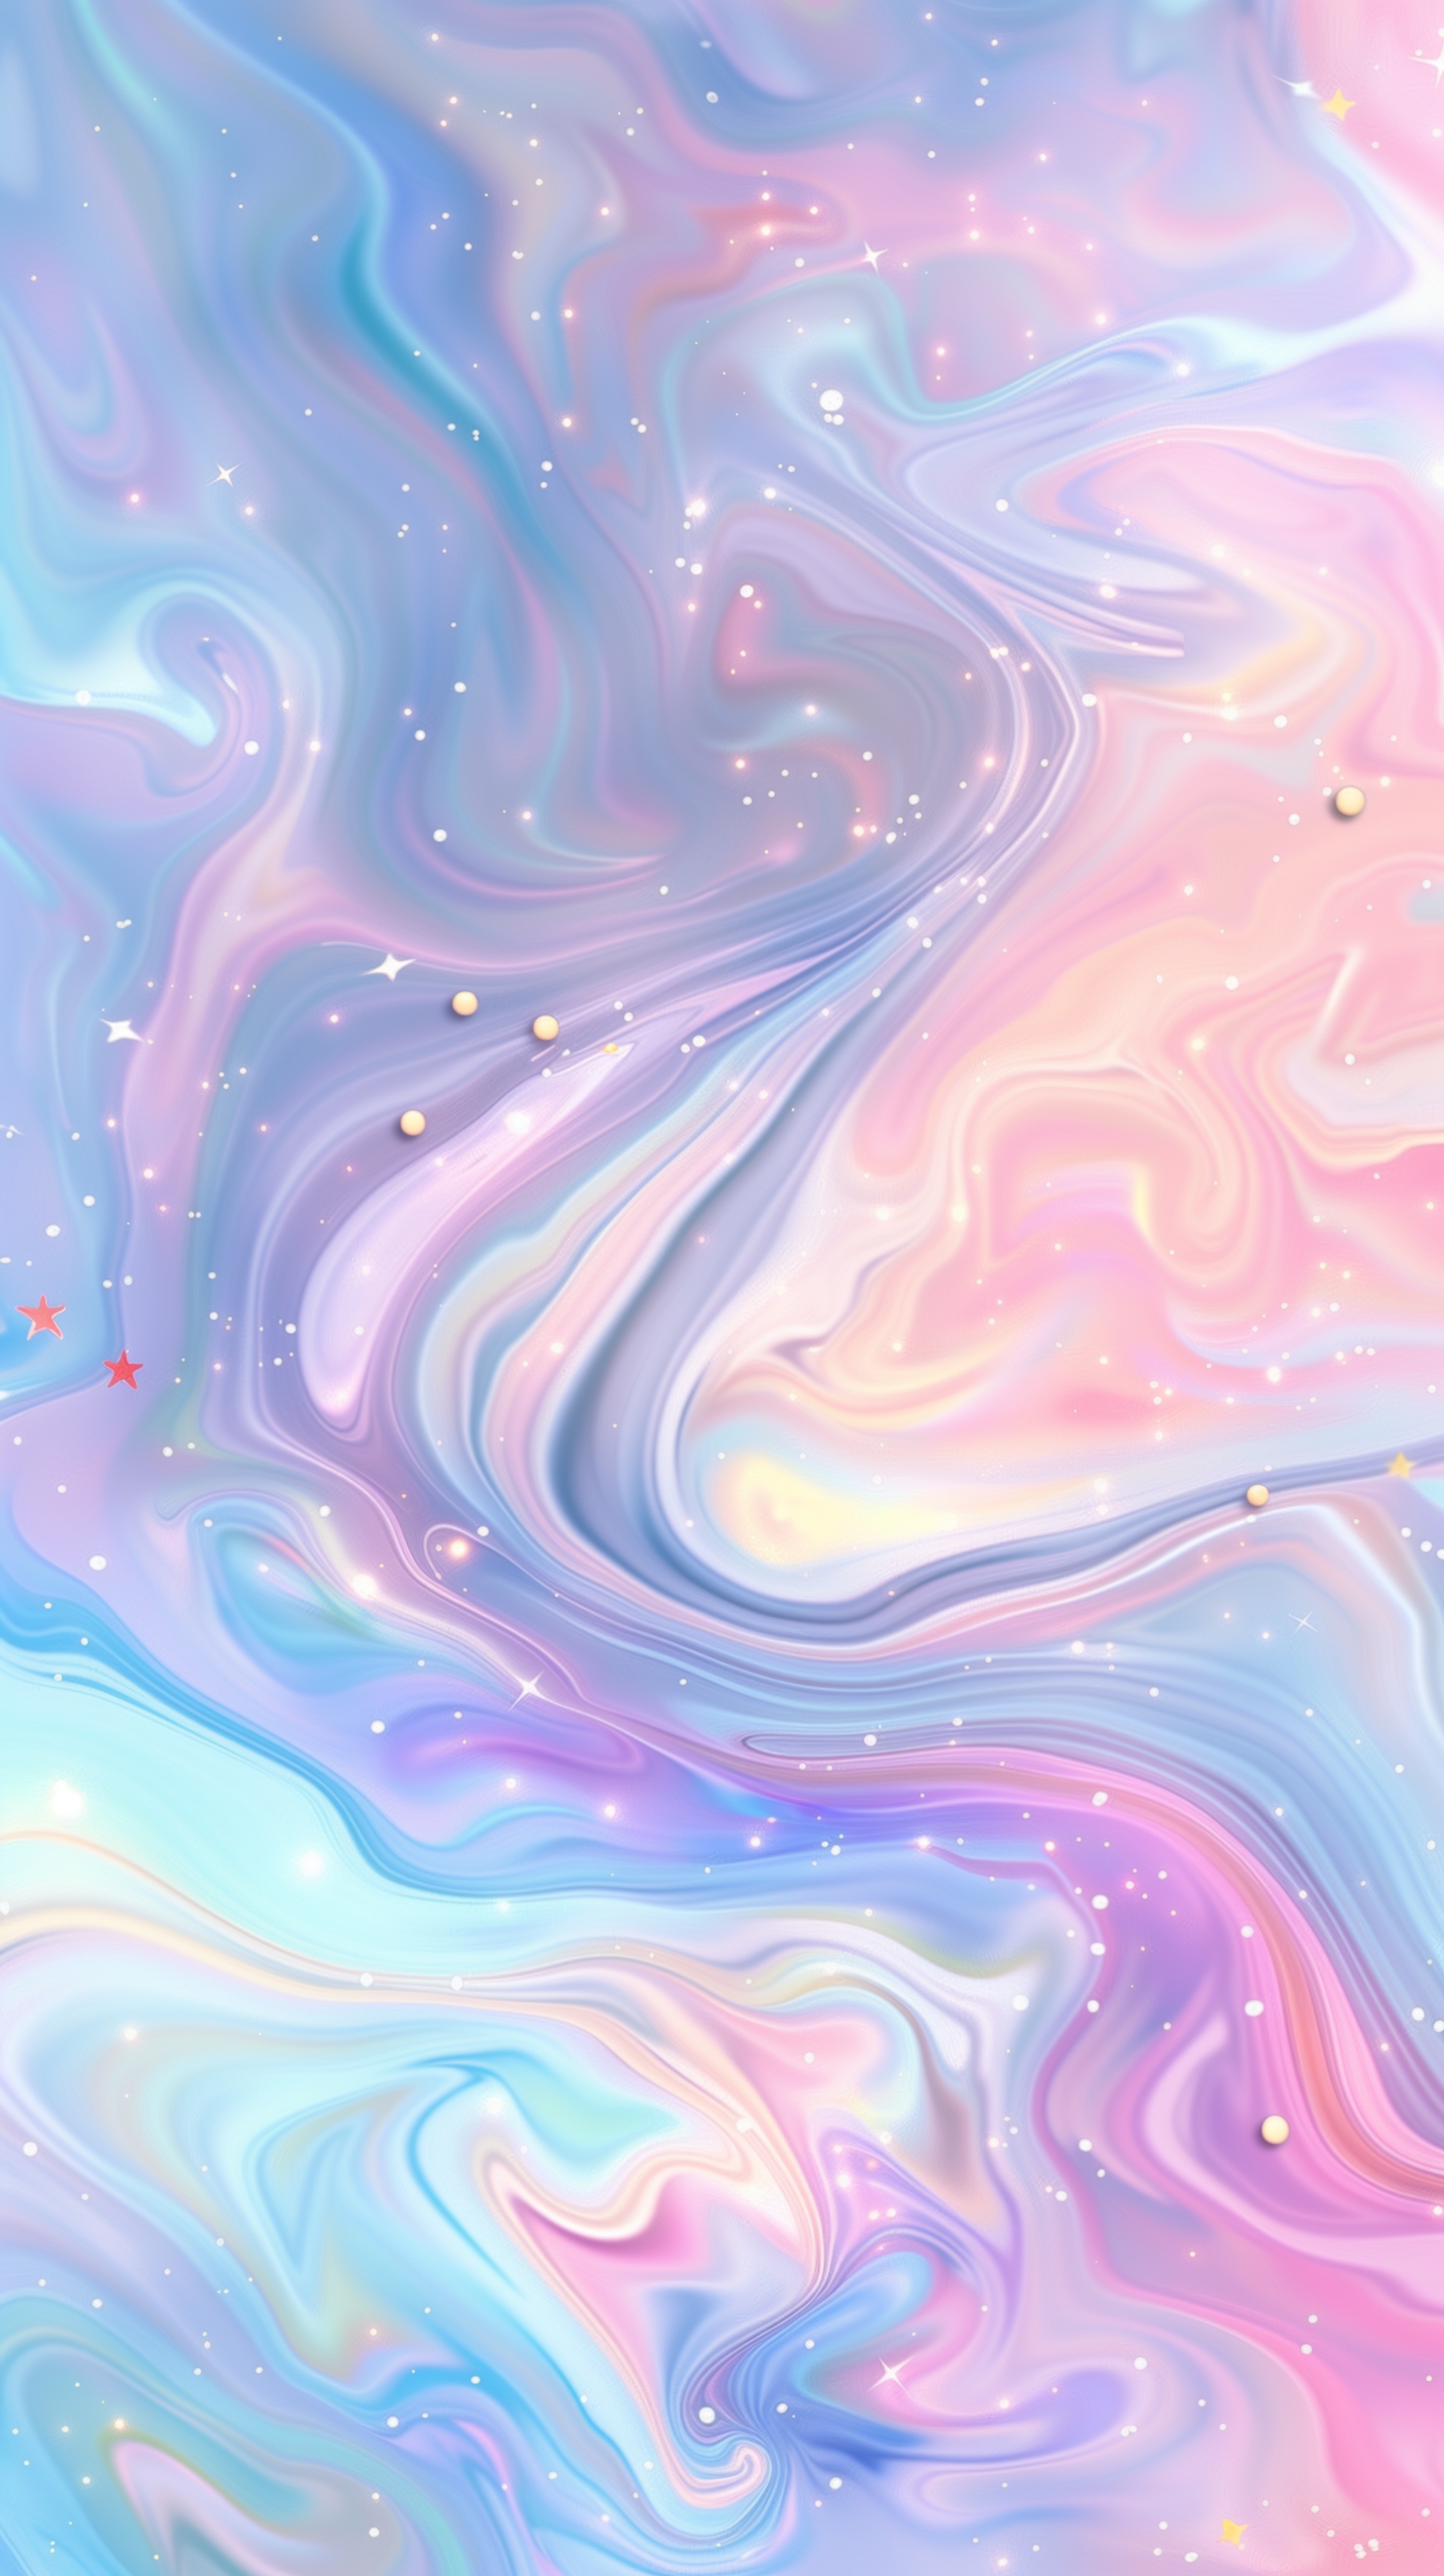 Swirling Pastel Galaxy with Stars 牆紙[58935a042c3f47169f40]